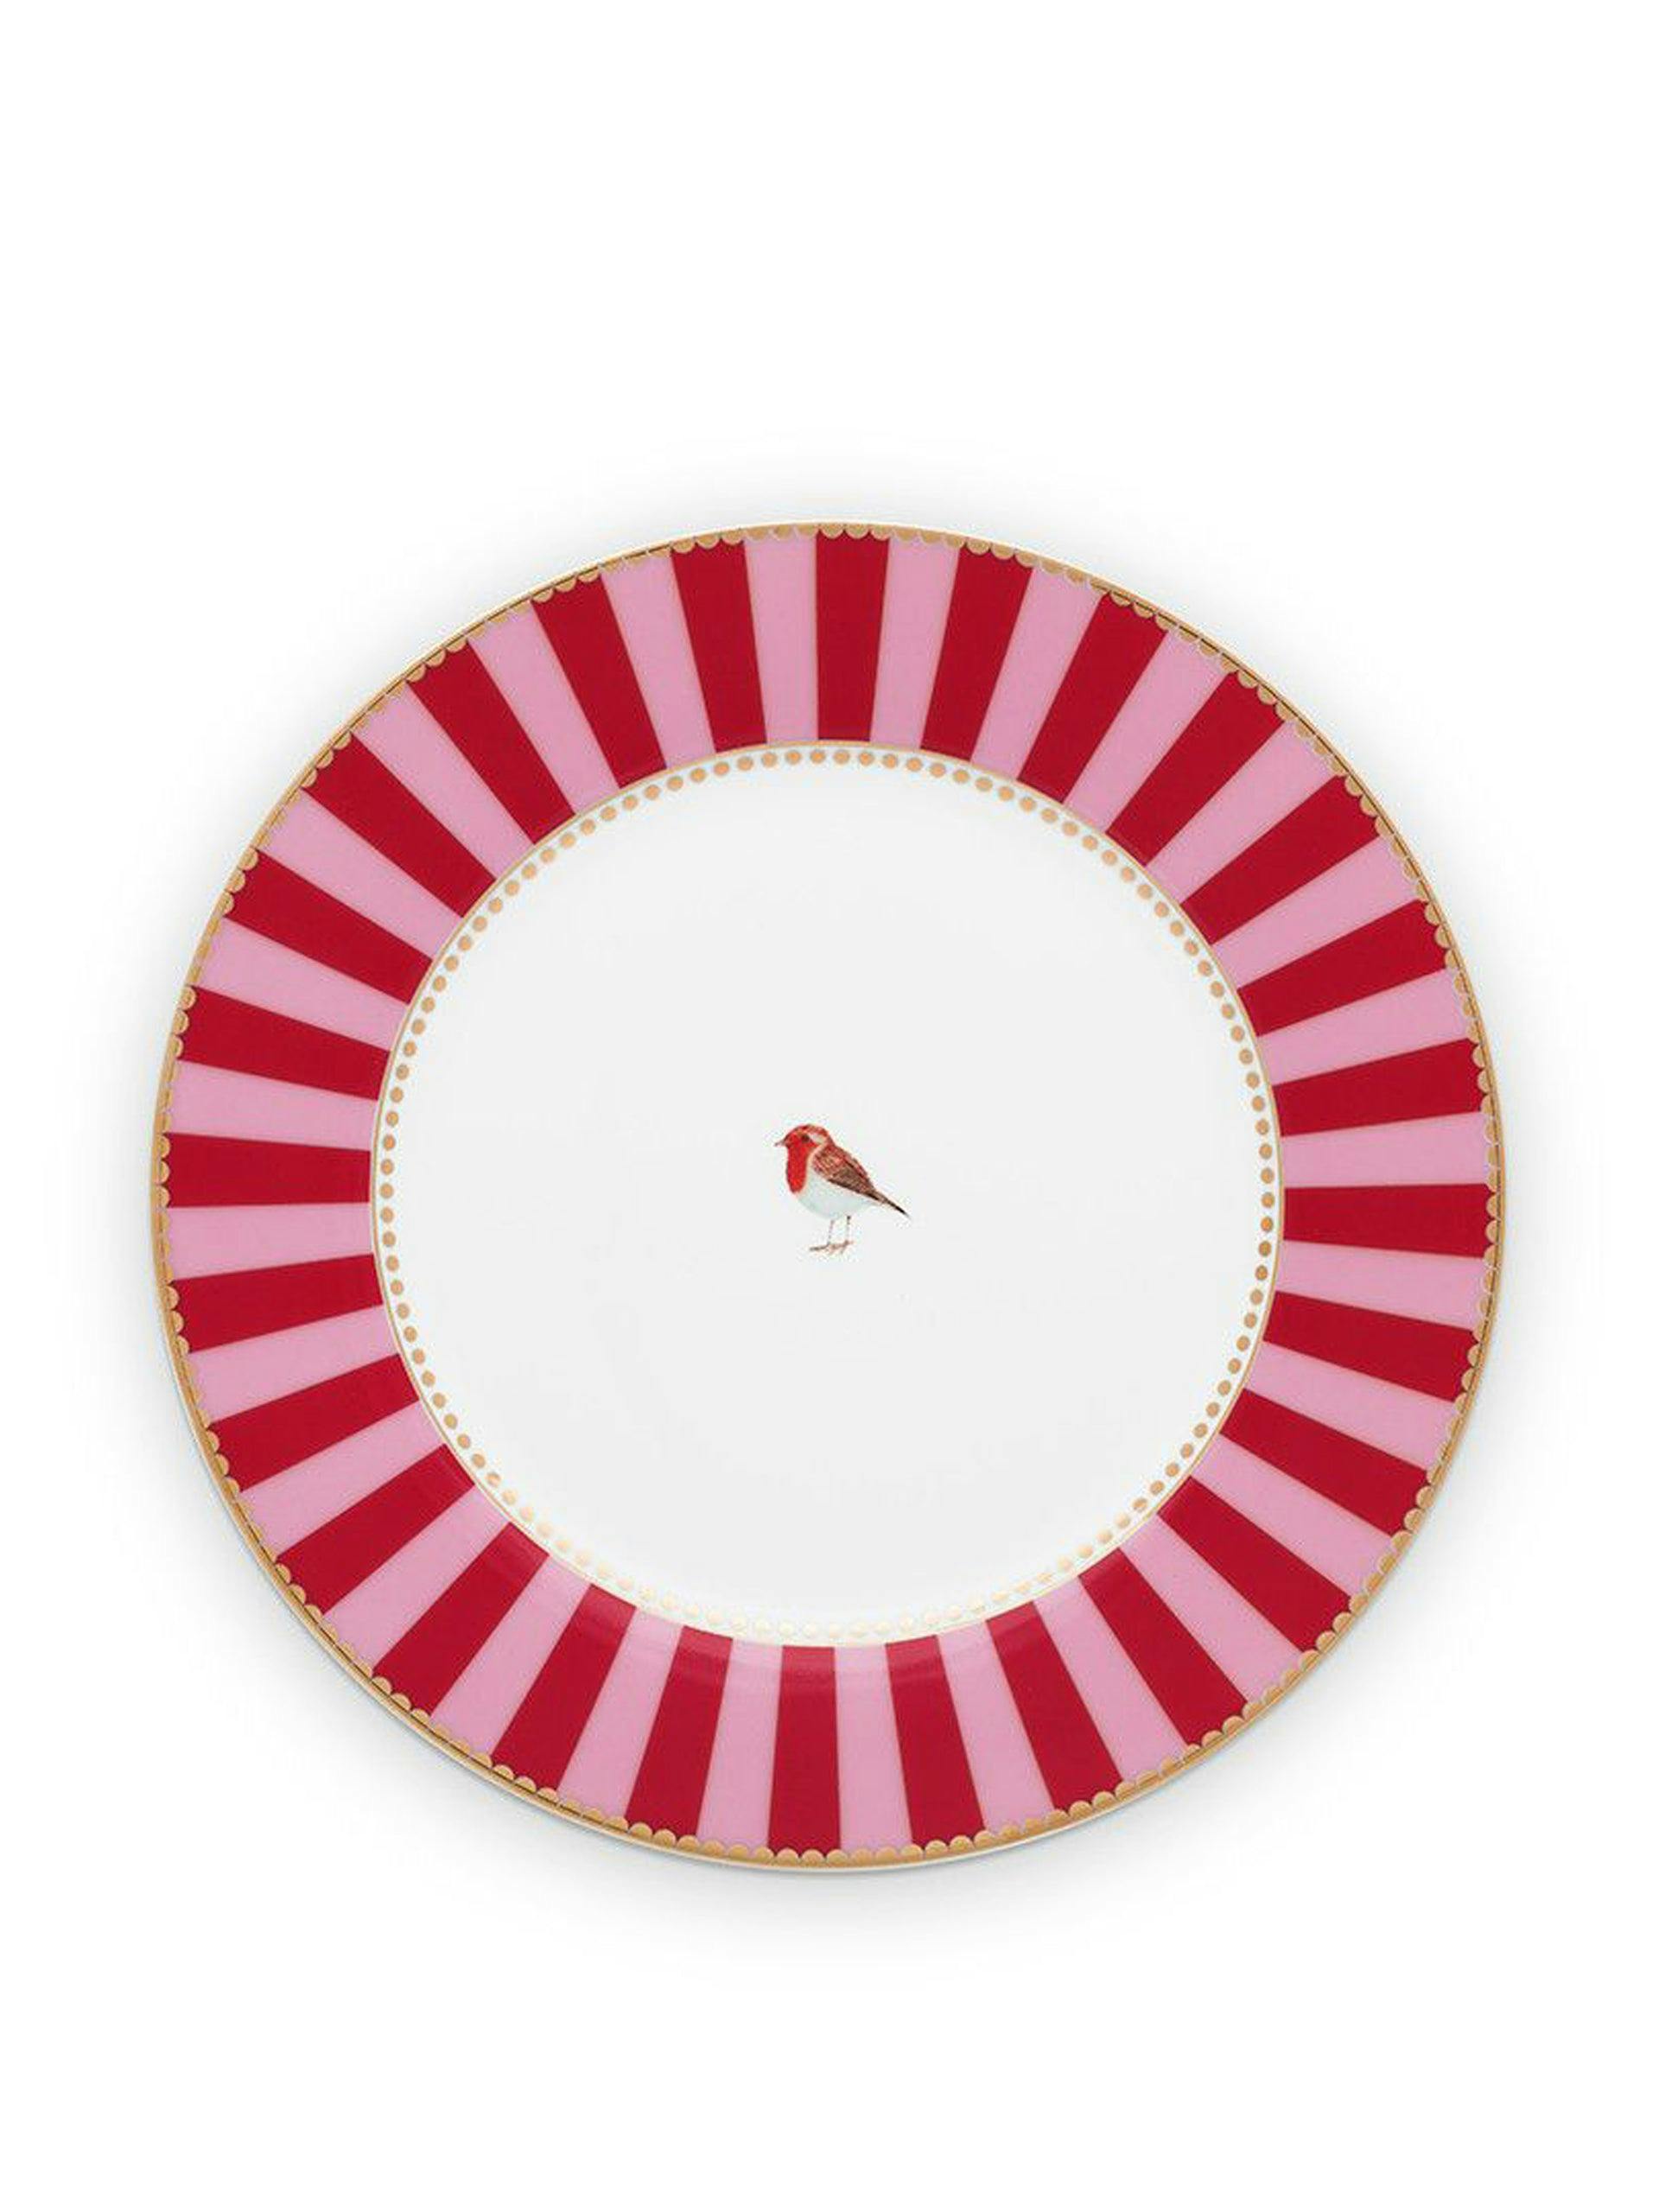 Dinner plate with bird print